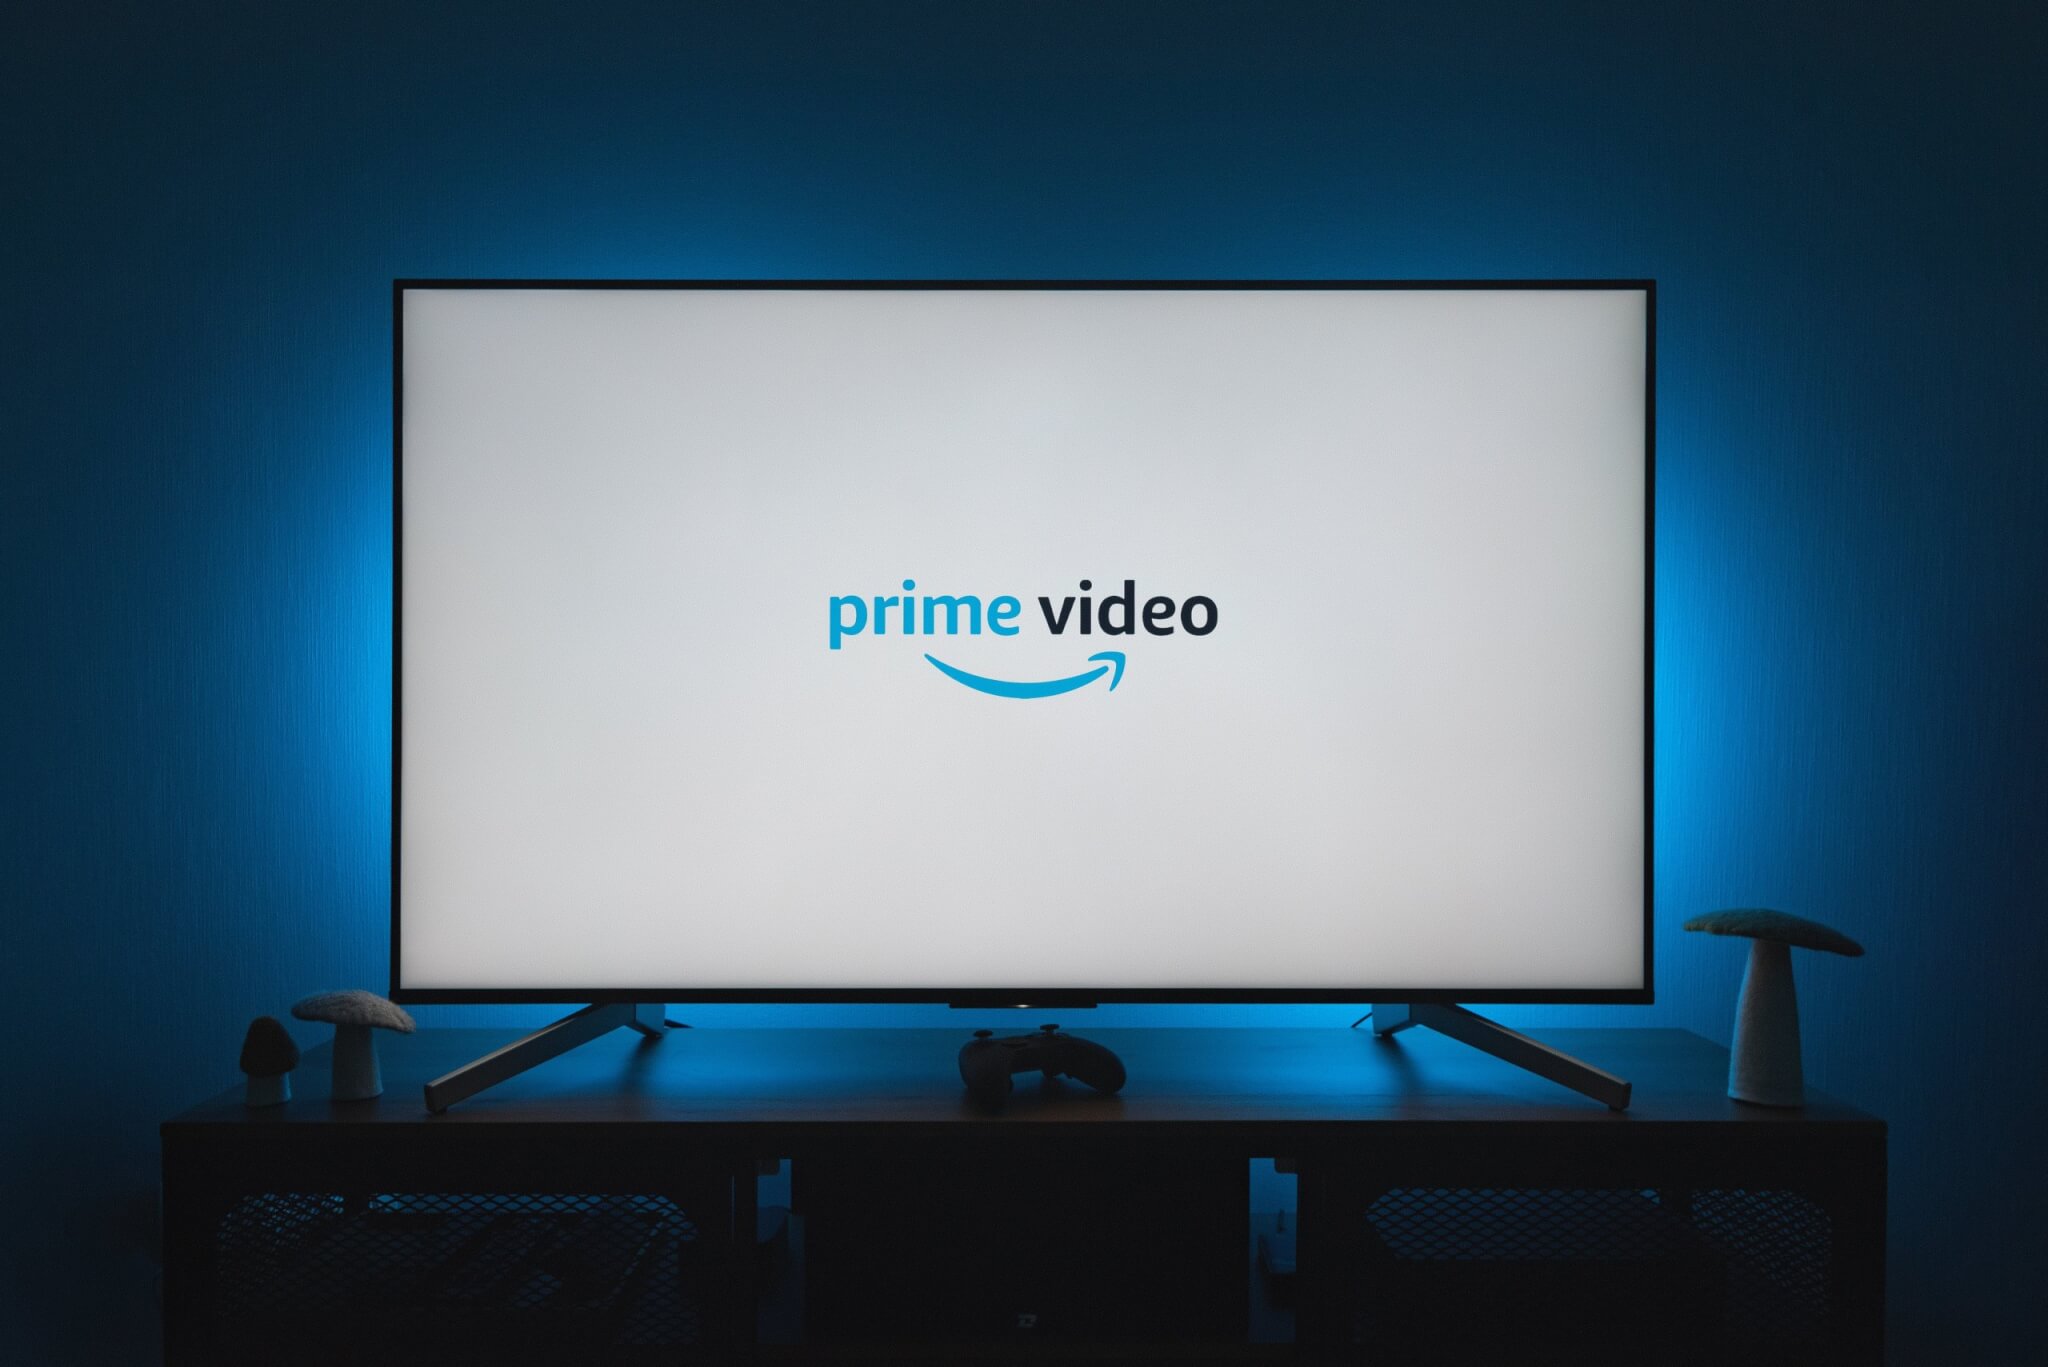 Watching Amazon Prime video